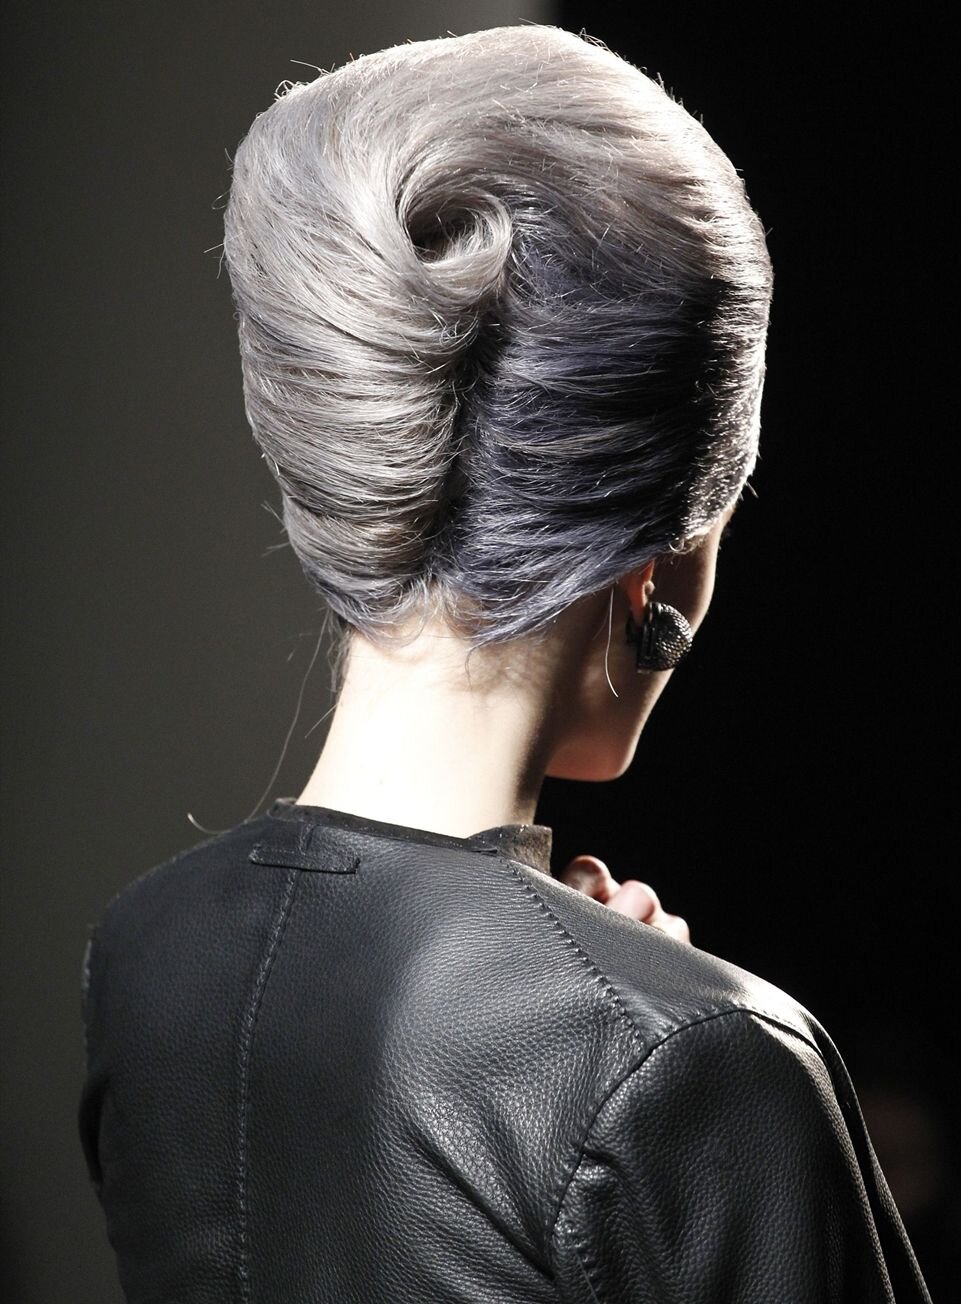 french twist hairstyle modern new trend ways to style updo elegant work appropriate street style grayhair